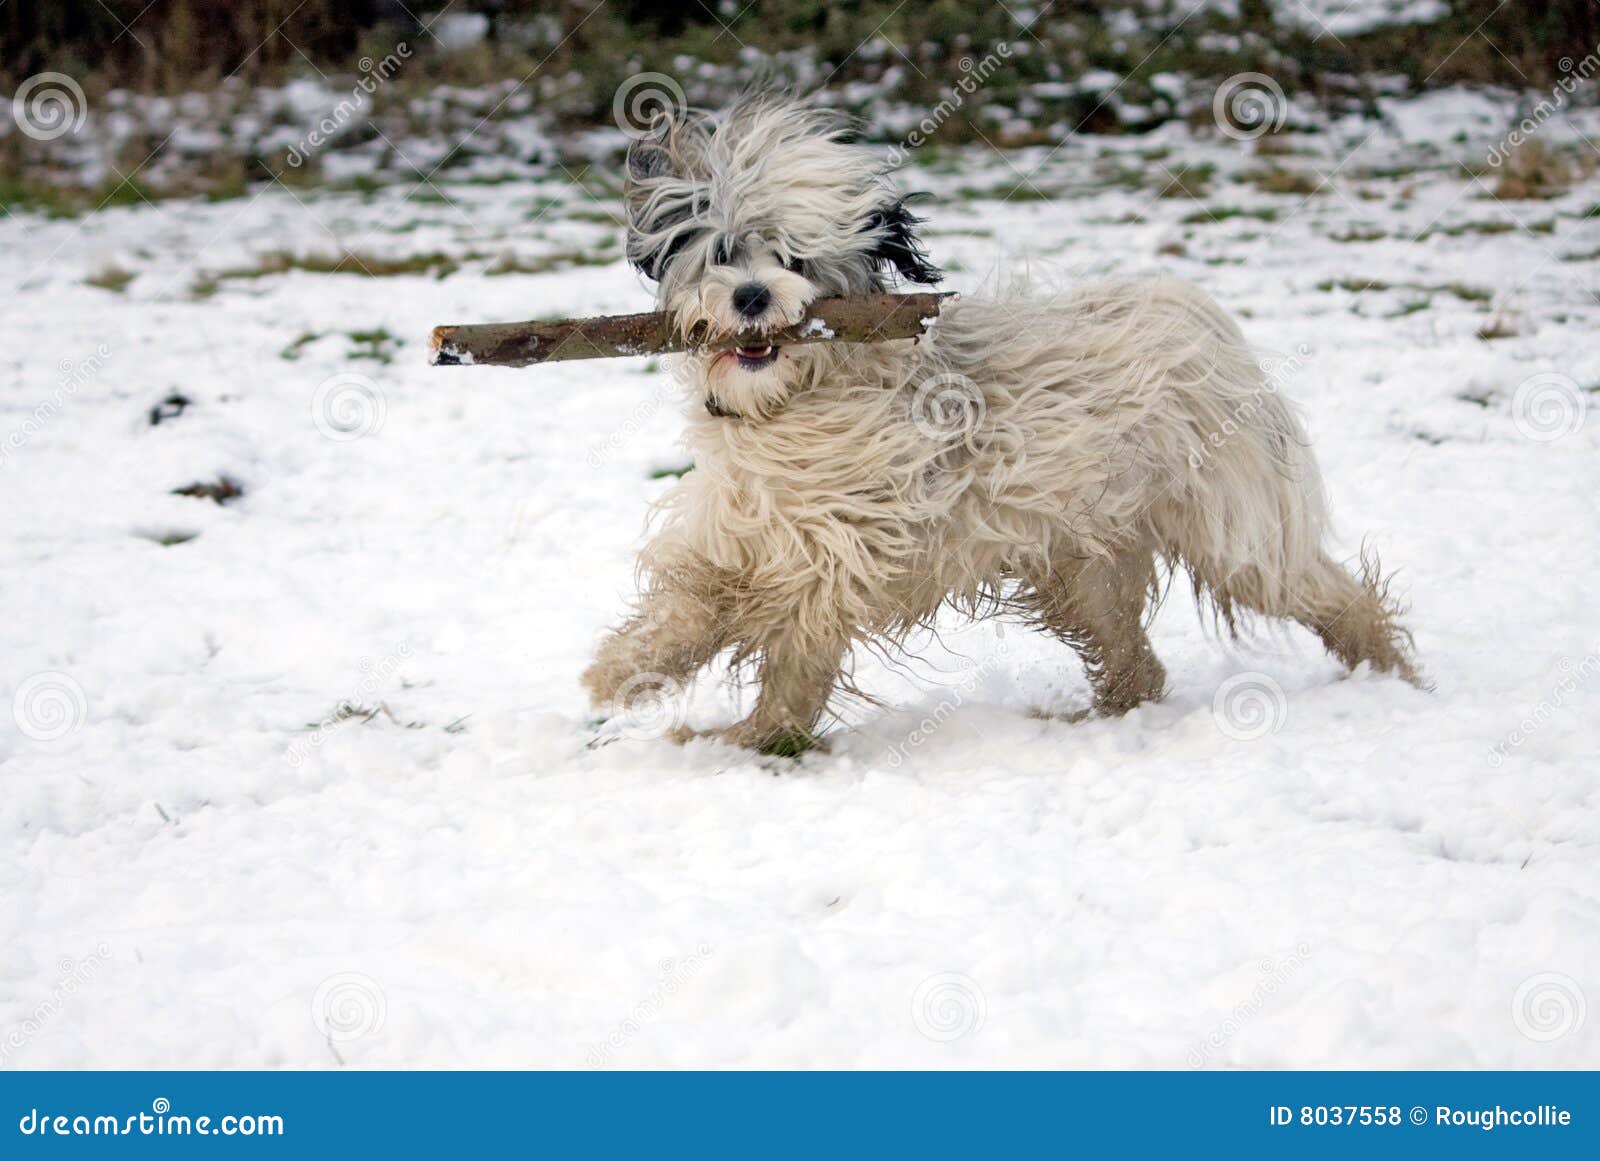 funny-dog-snow-8037558.jpg